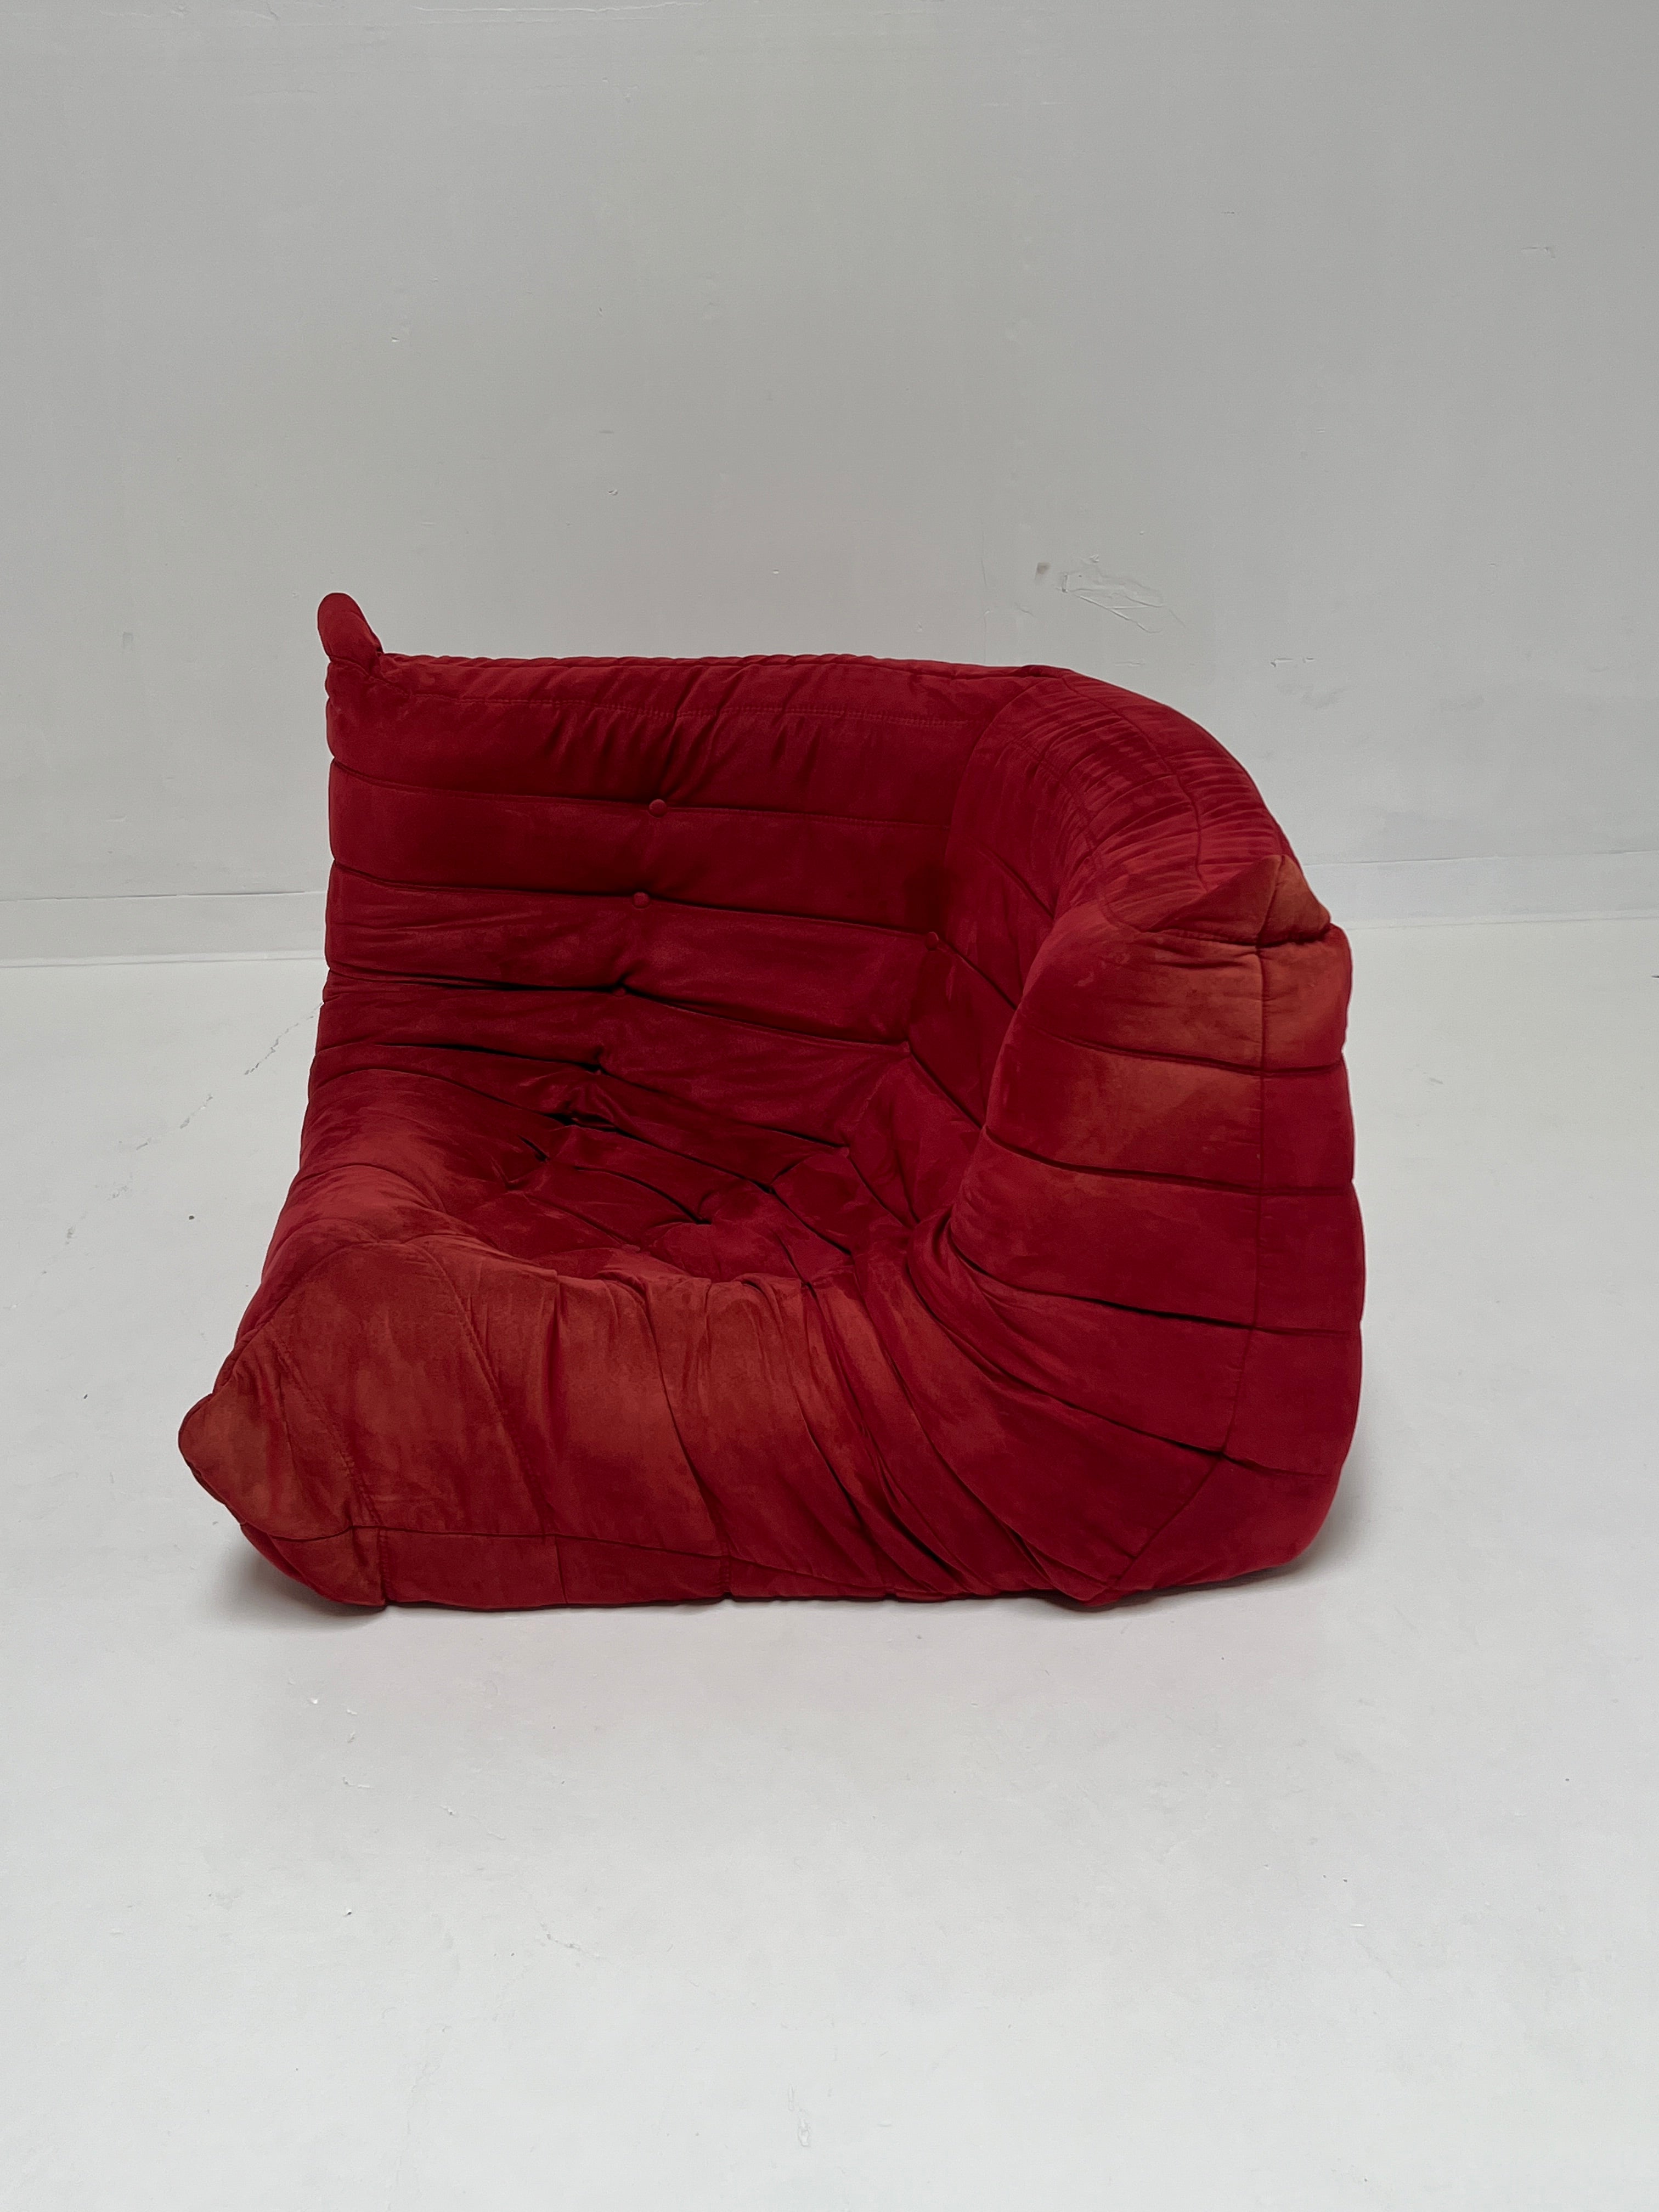 Red Togo Style Corner Seat